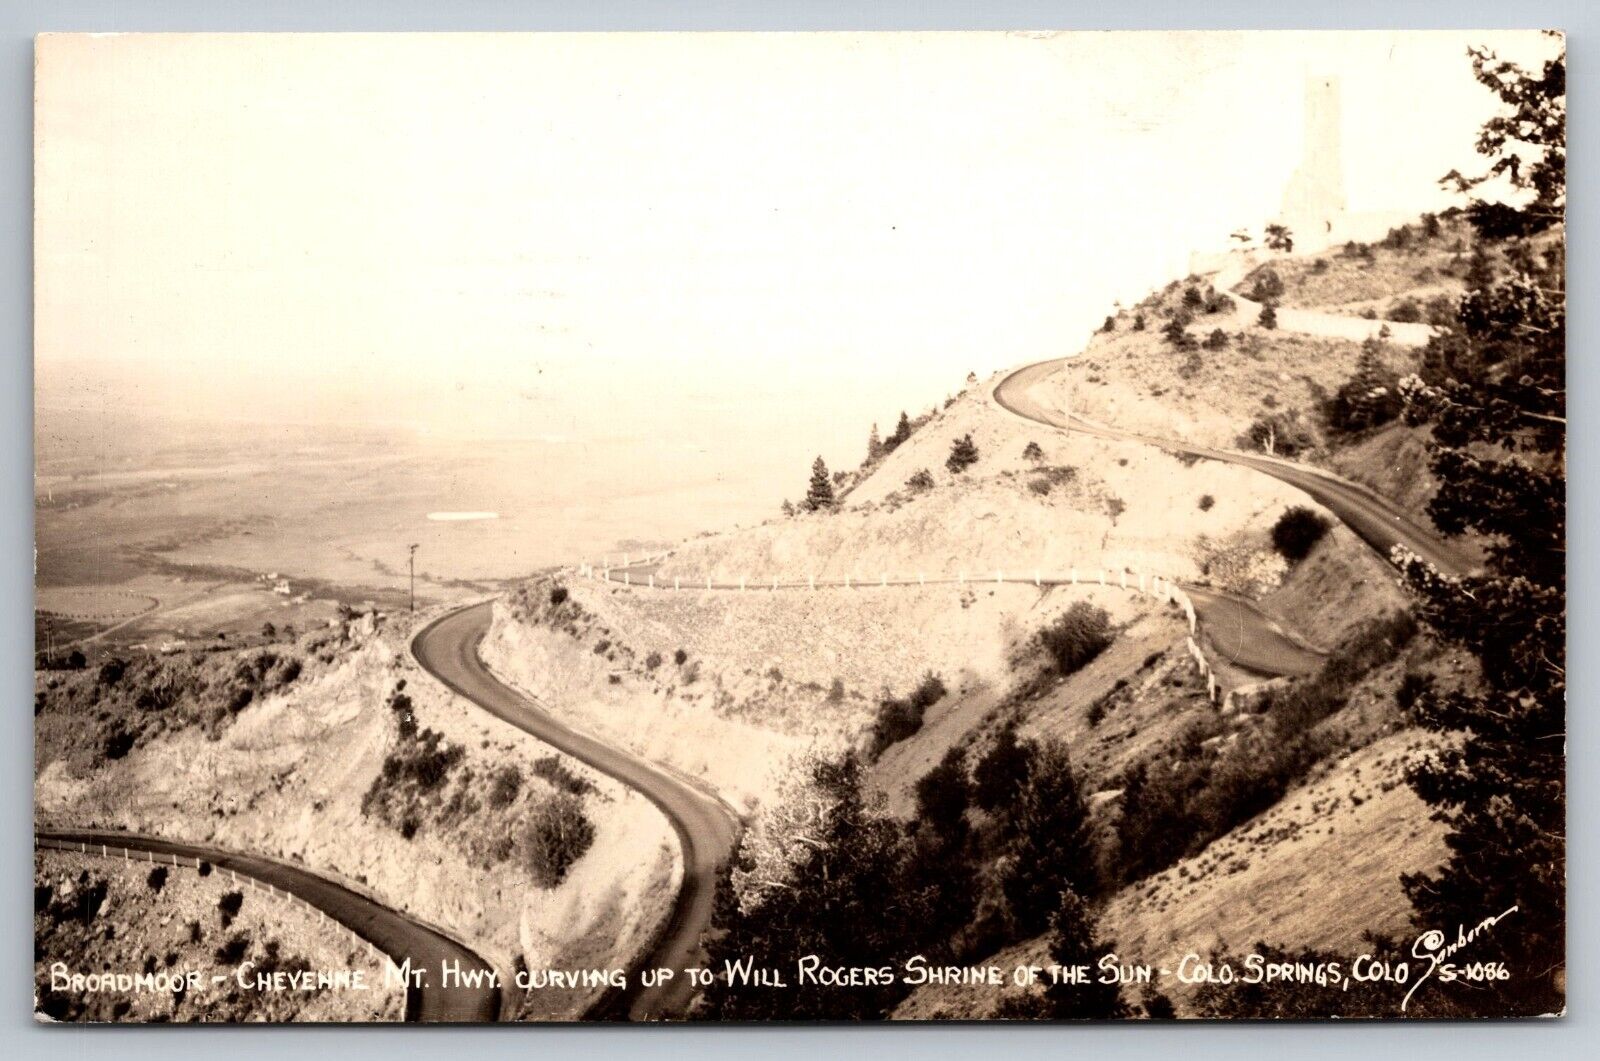 Broadmoor. Cheyenne Mt Hwy. Will Rogers Shrine Colorado Real Photo Postcard RPPC